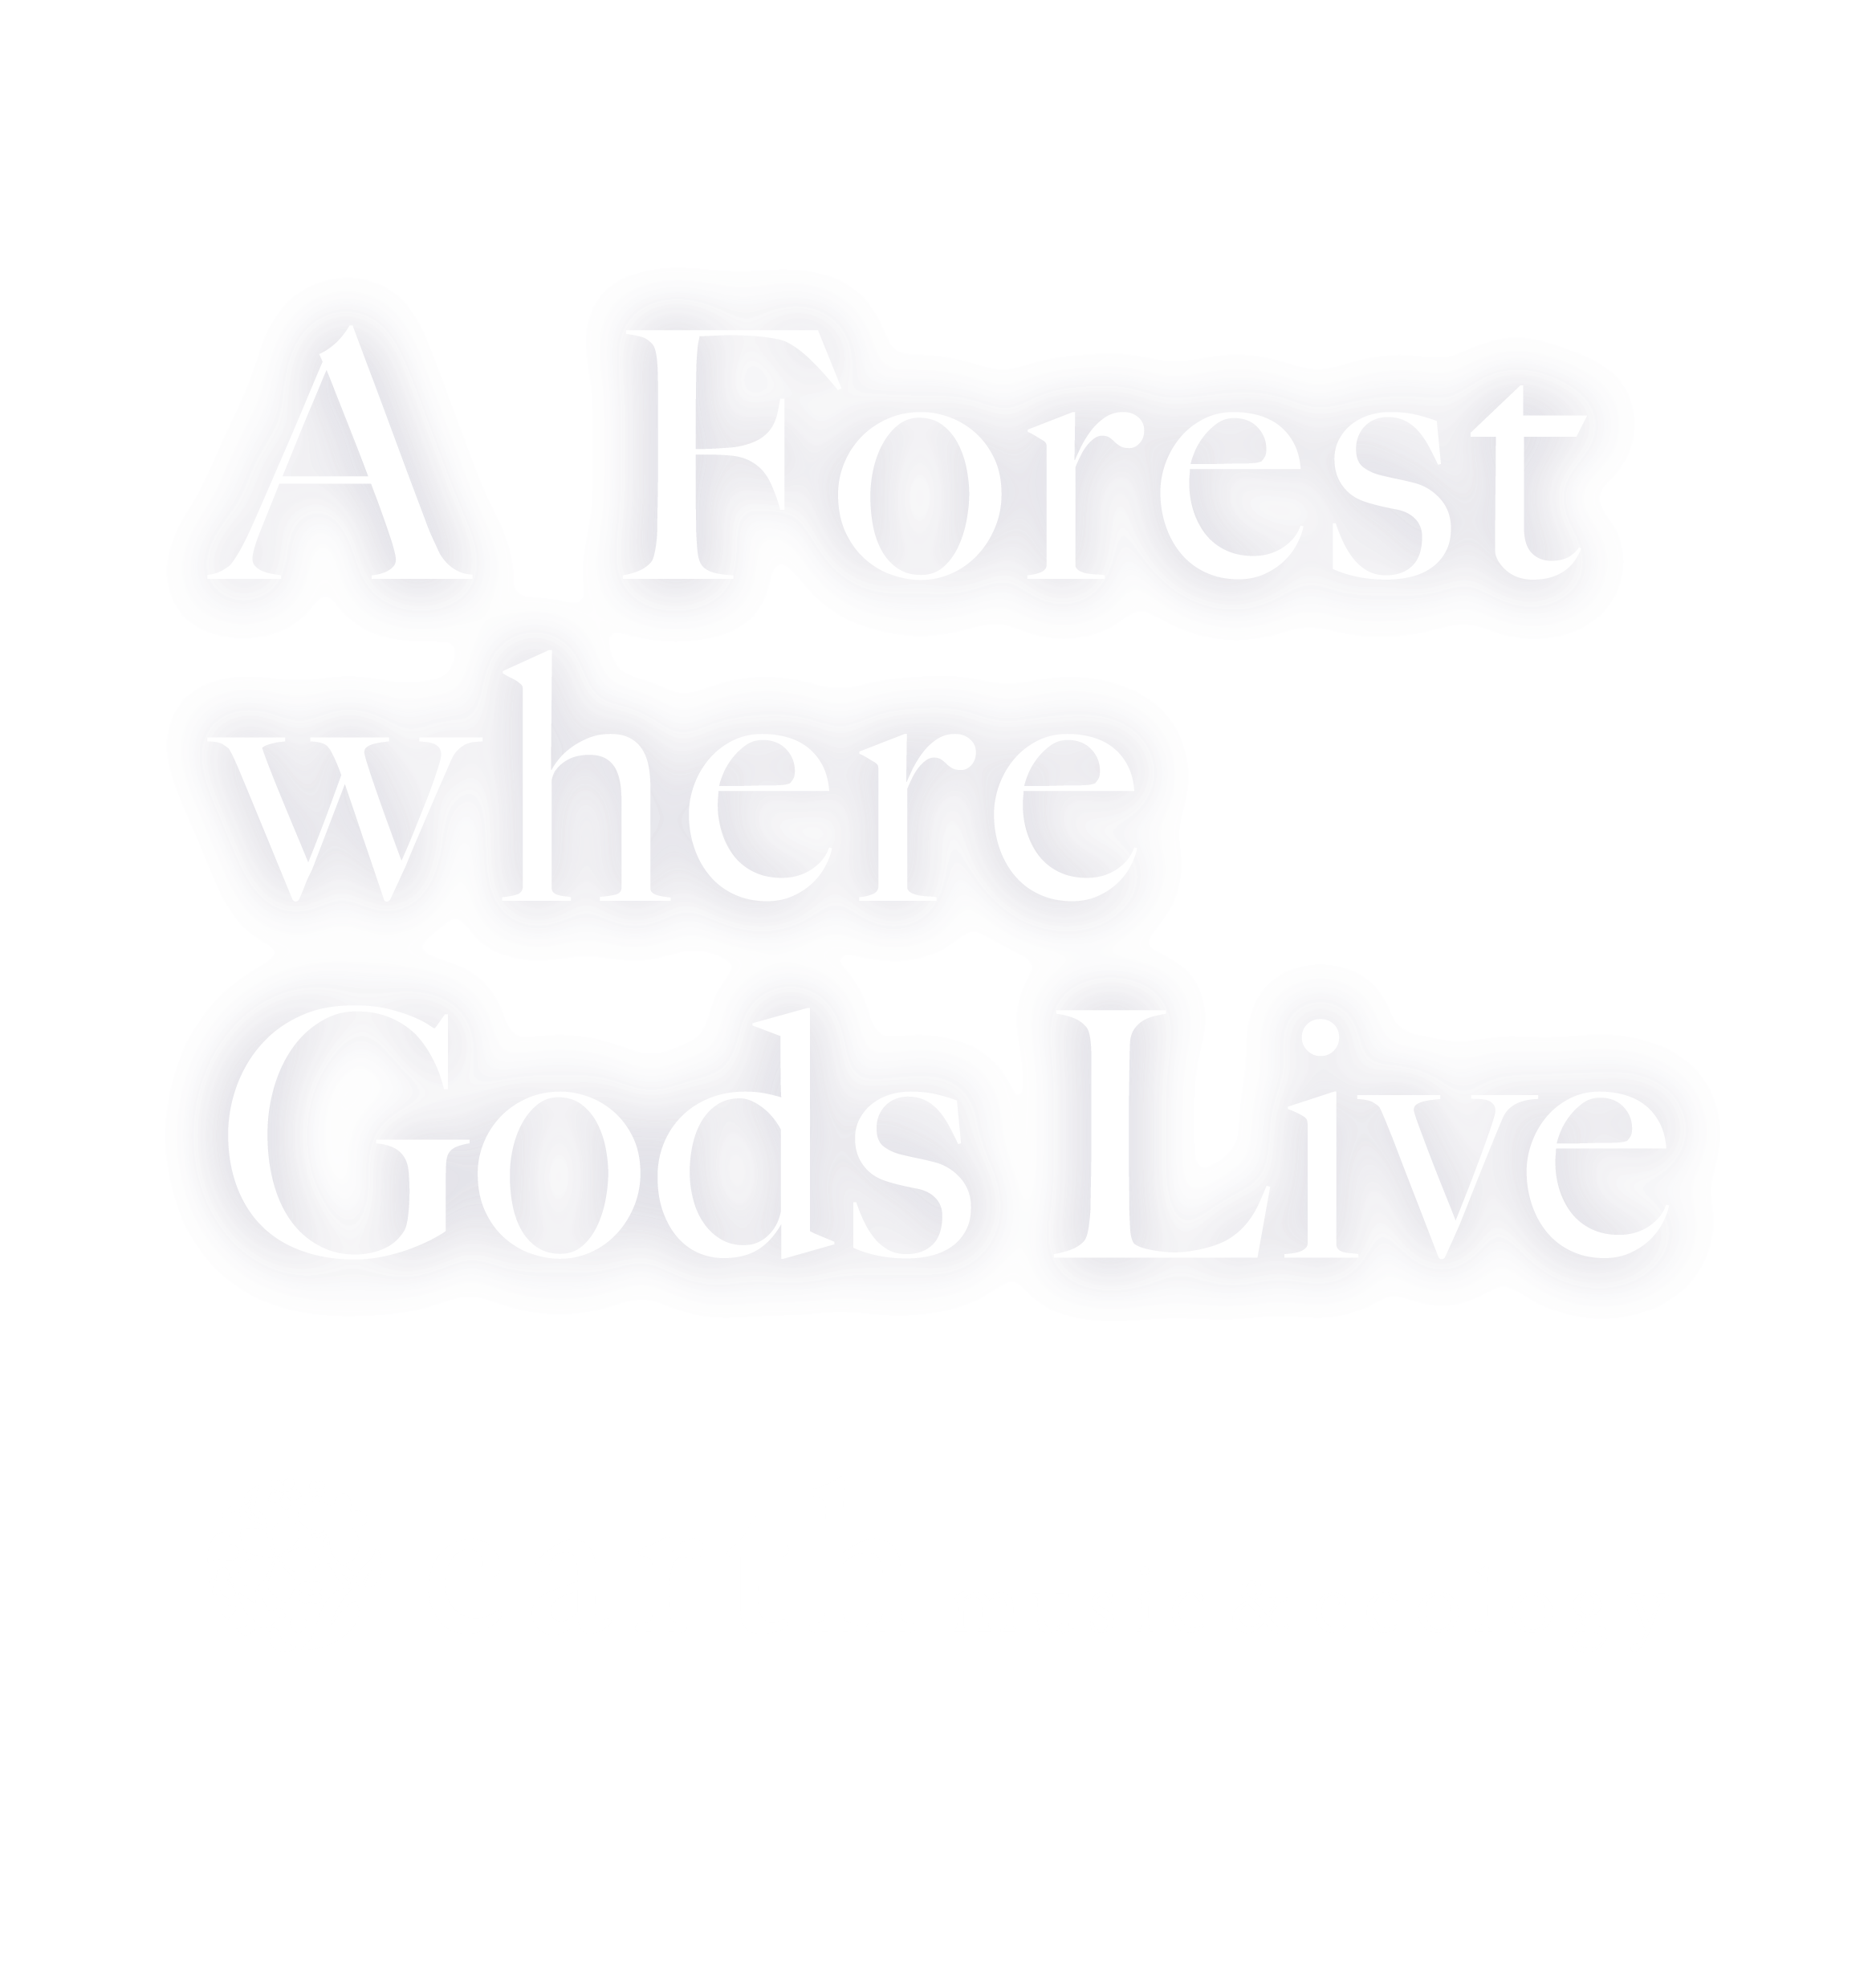 teamLab: A Forest Where Gods Live – earth musicu0026ecology | teamLab